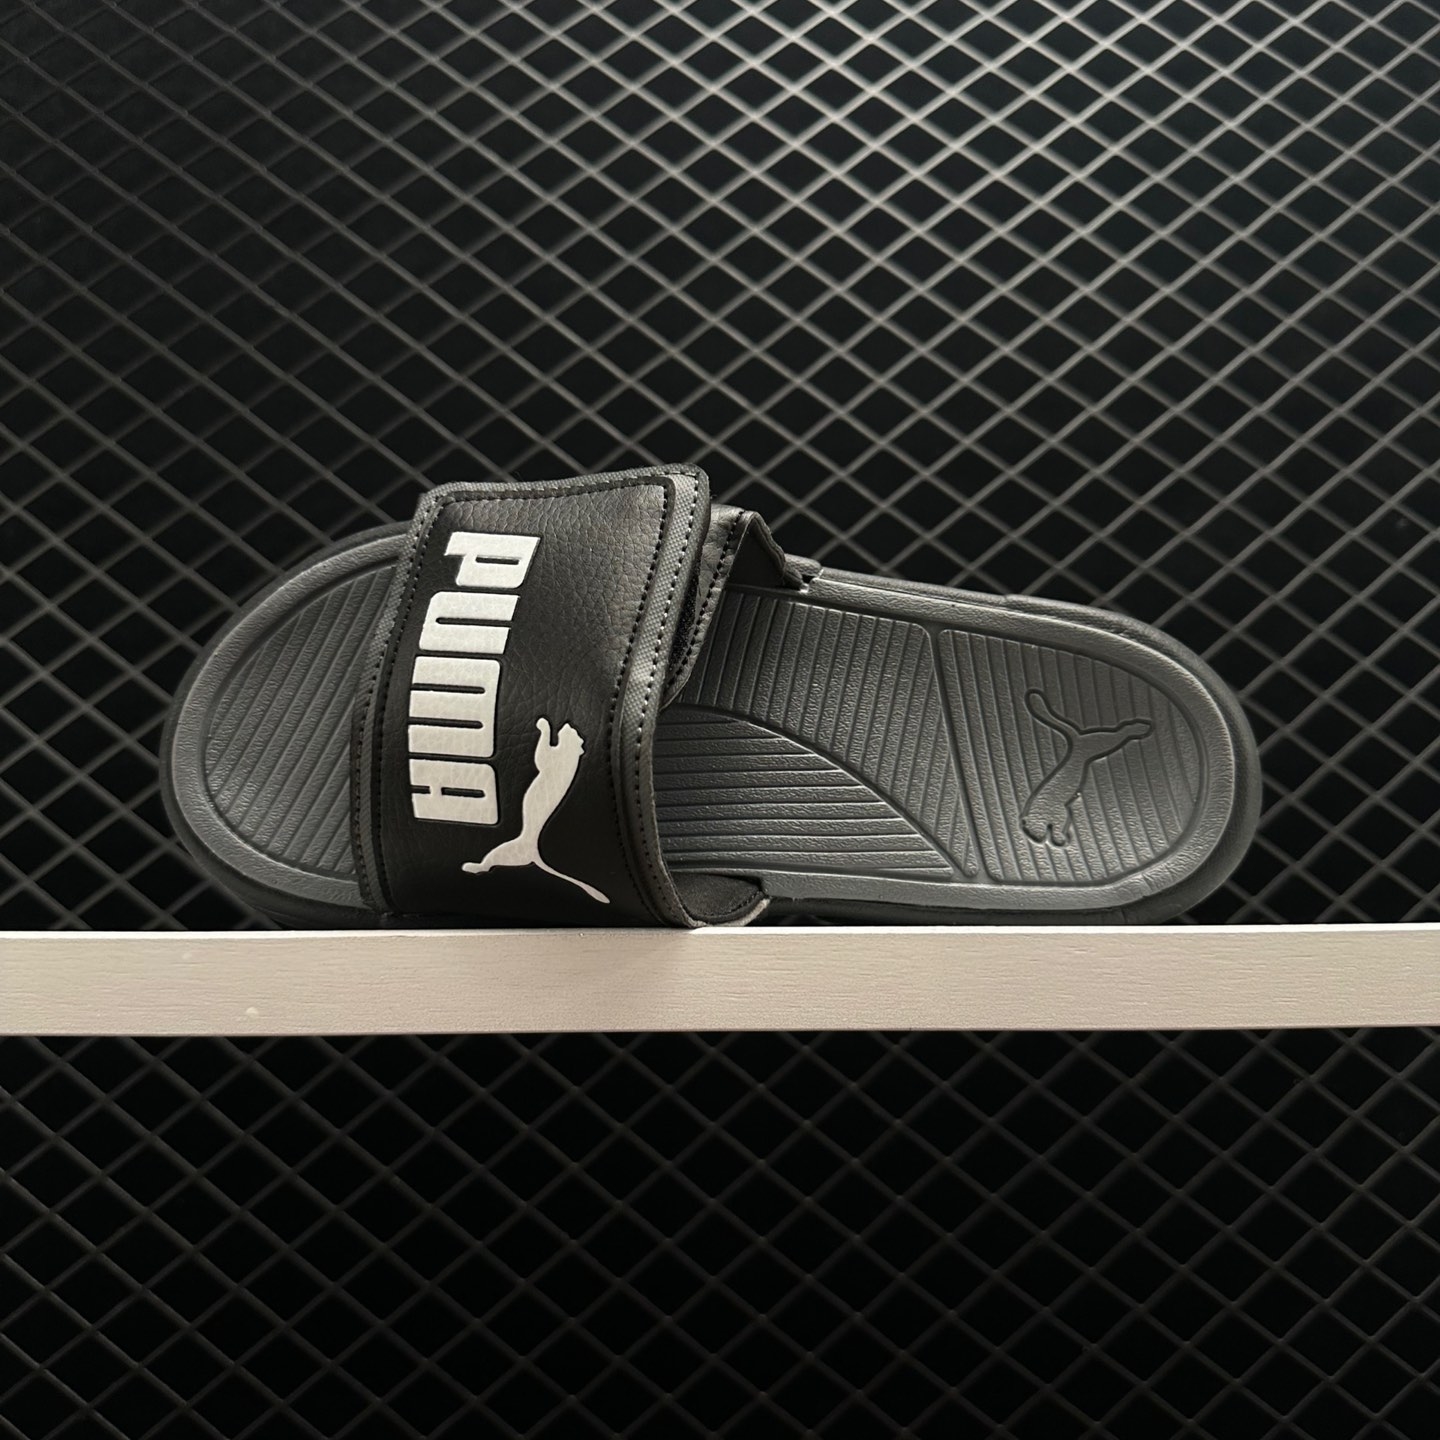 PUMA Black Royalcat Comfort Sandal 372280-01: Lightweight and Stylish Comfort for Your Feet